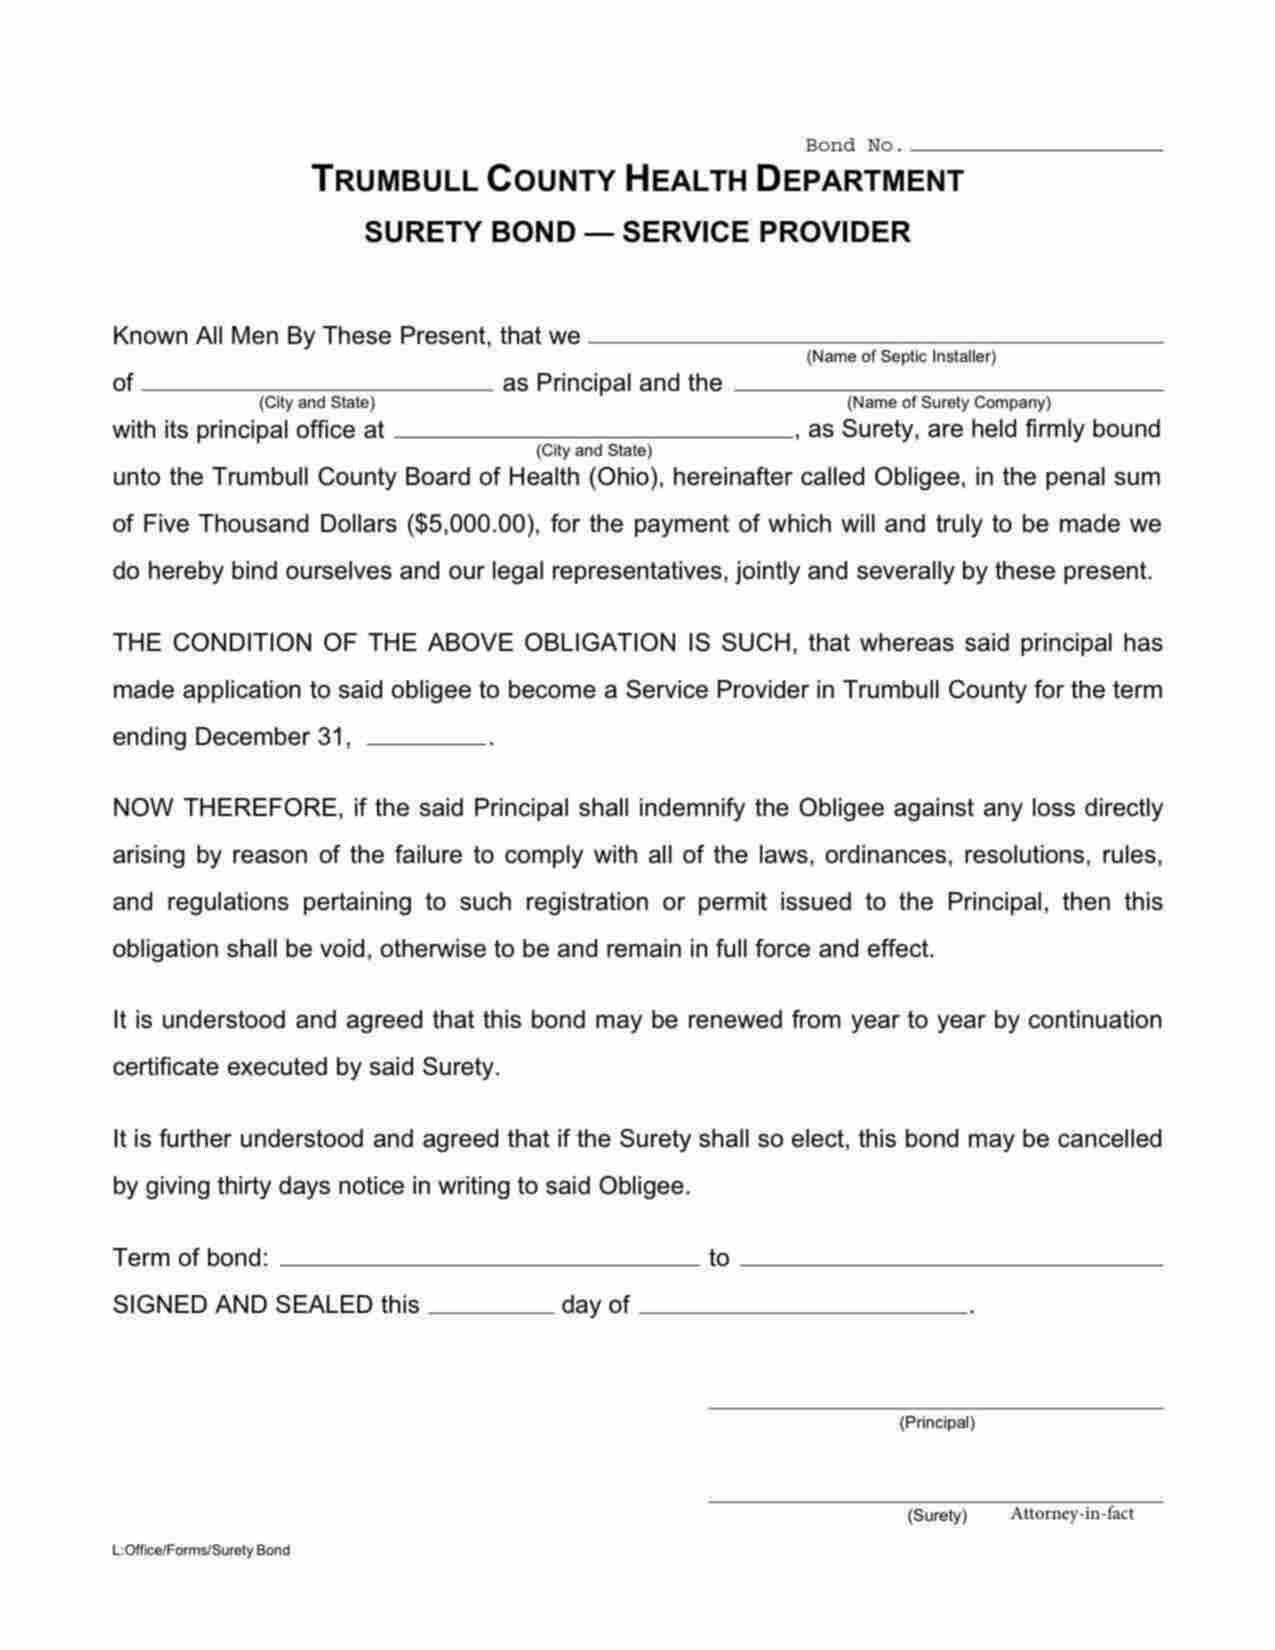 Ohio Service Provider Bond Form